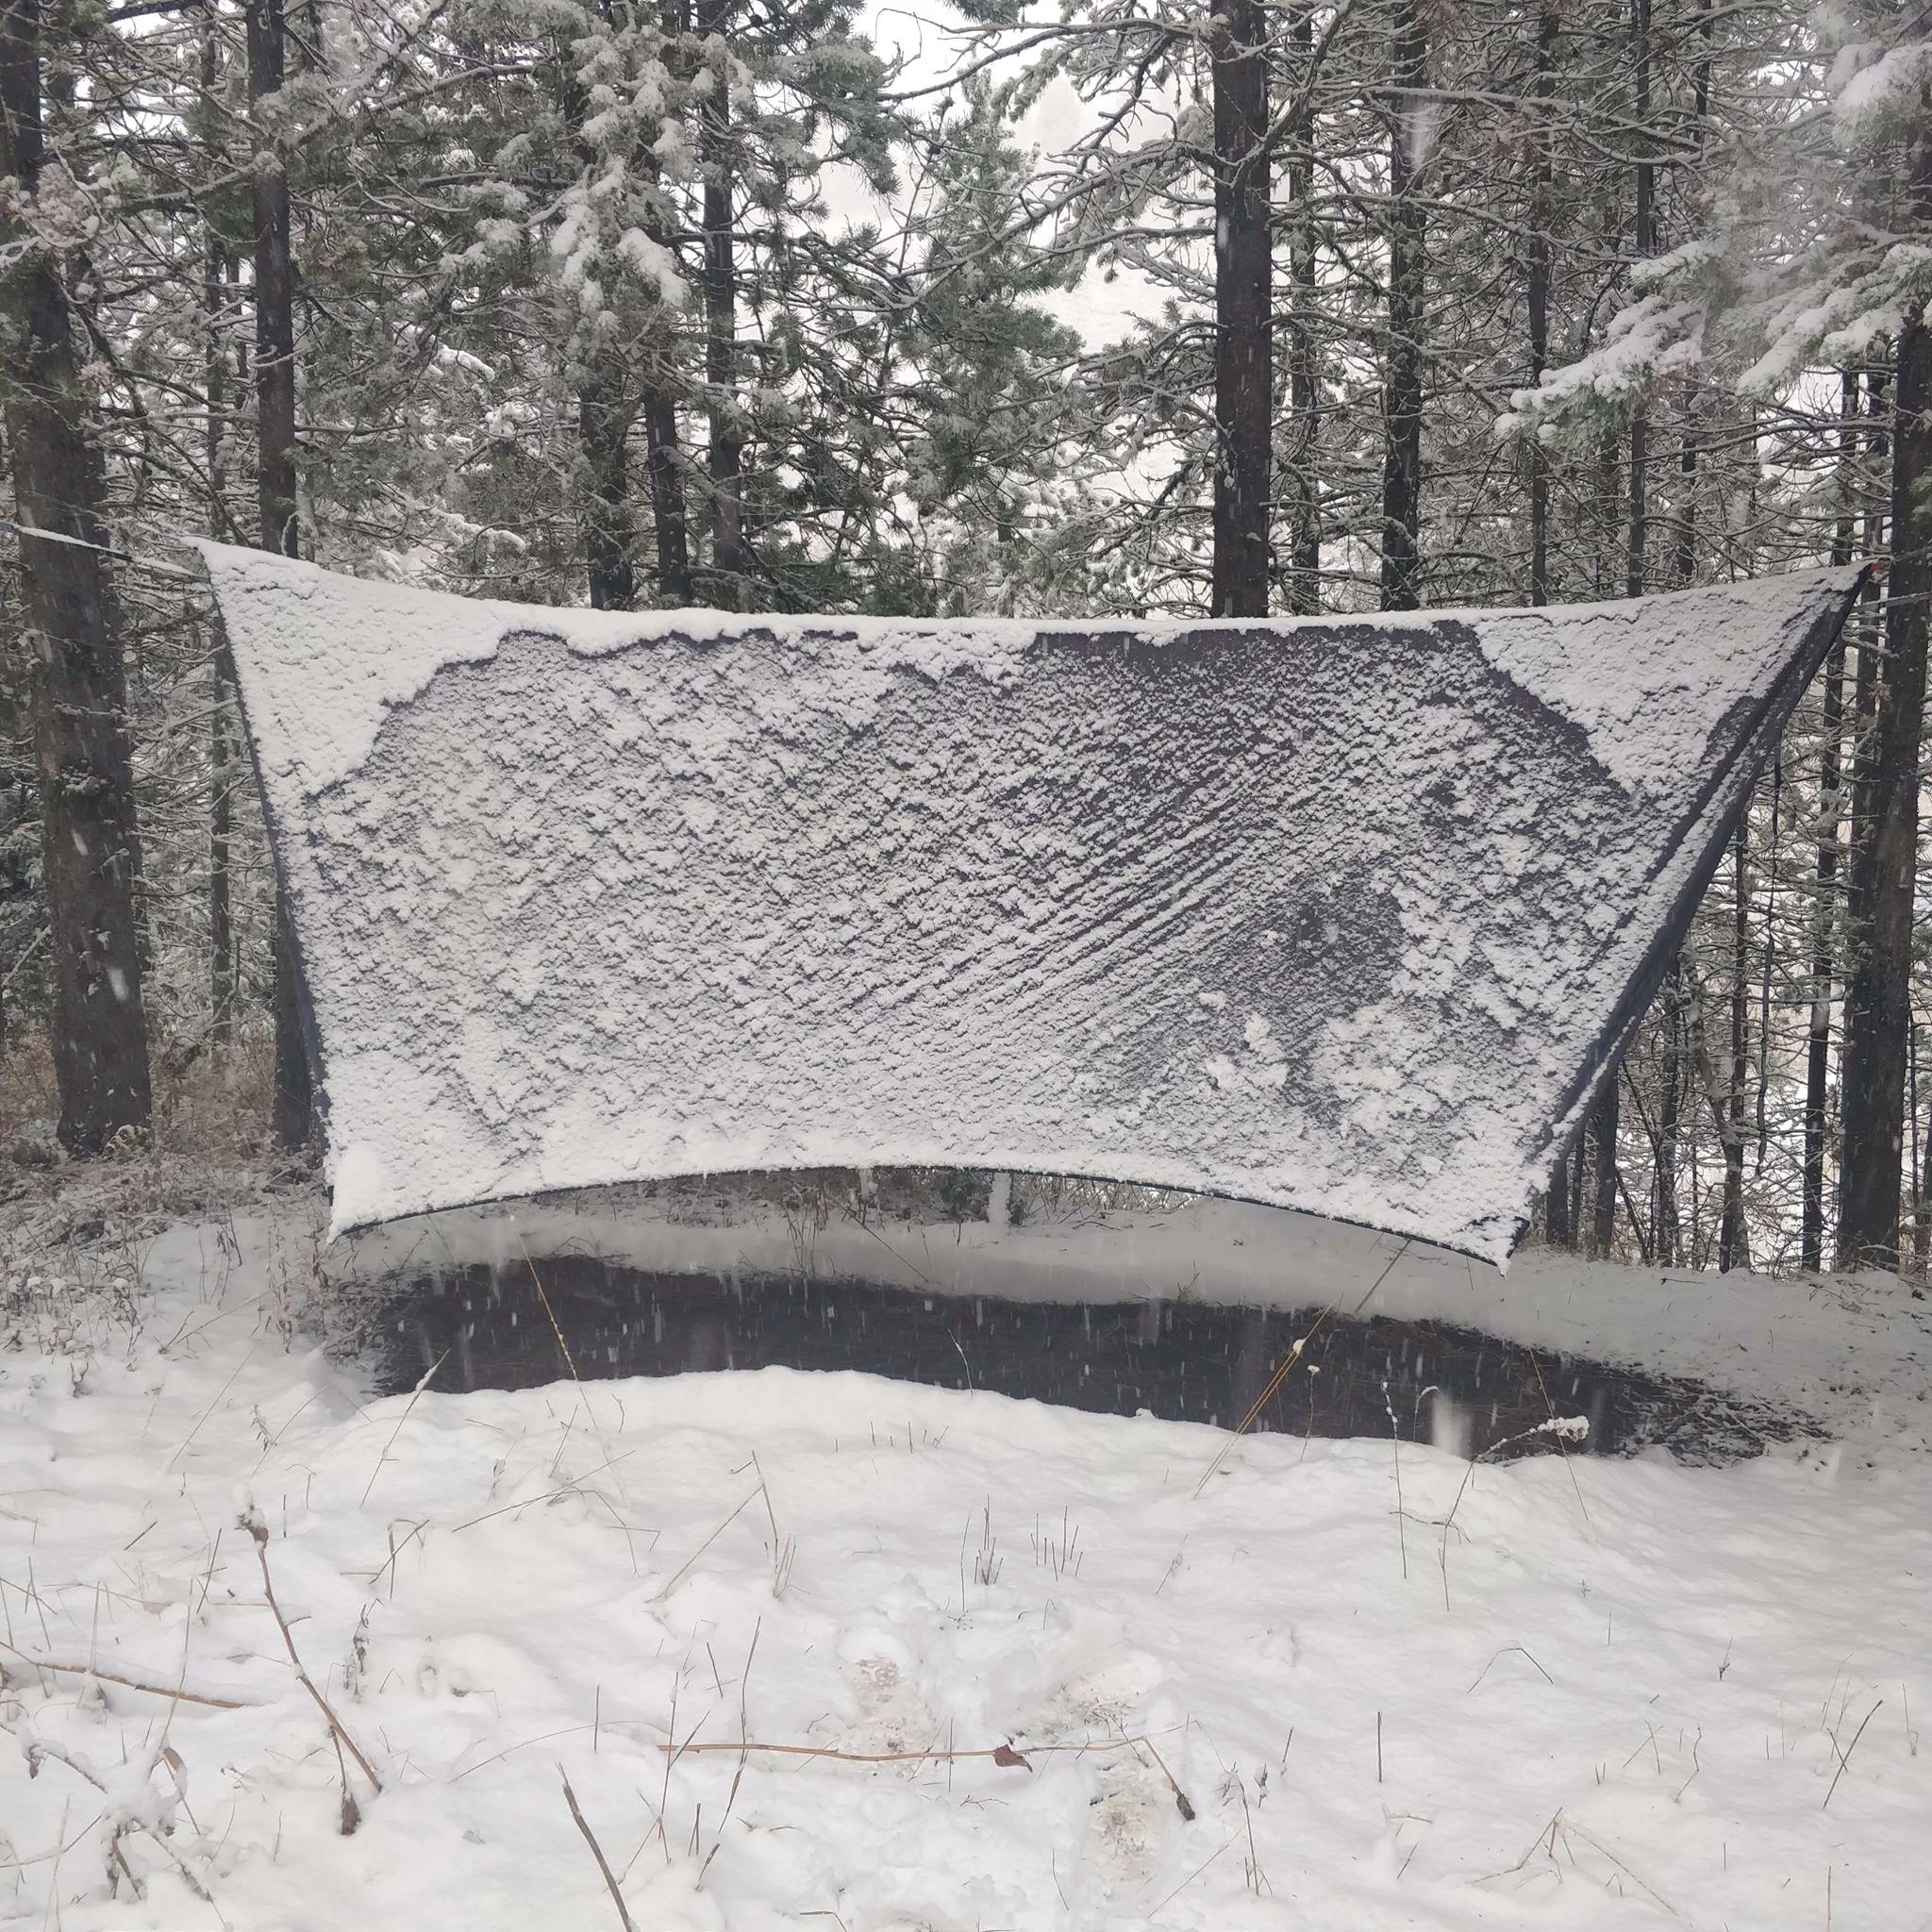  Sunyear Camping Hammock 4 Season Quilted Winter